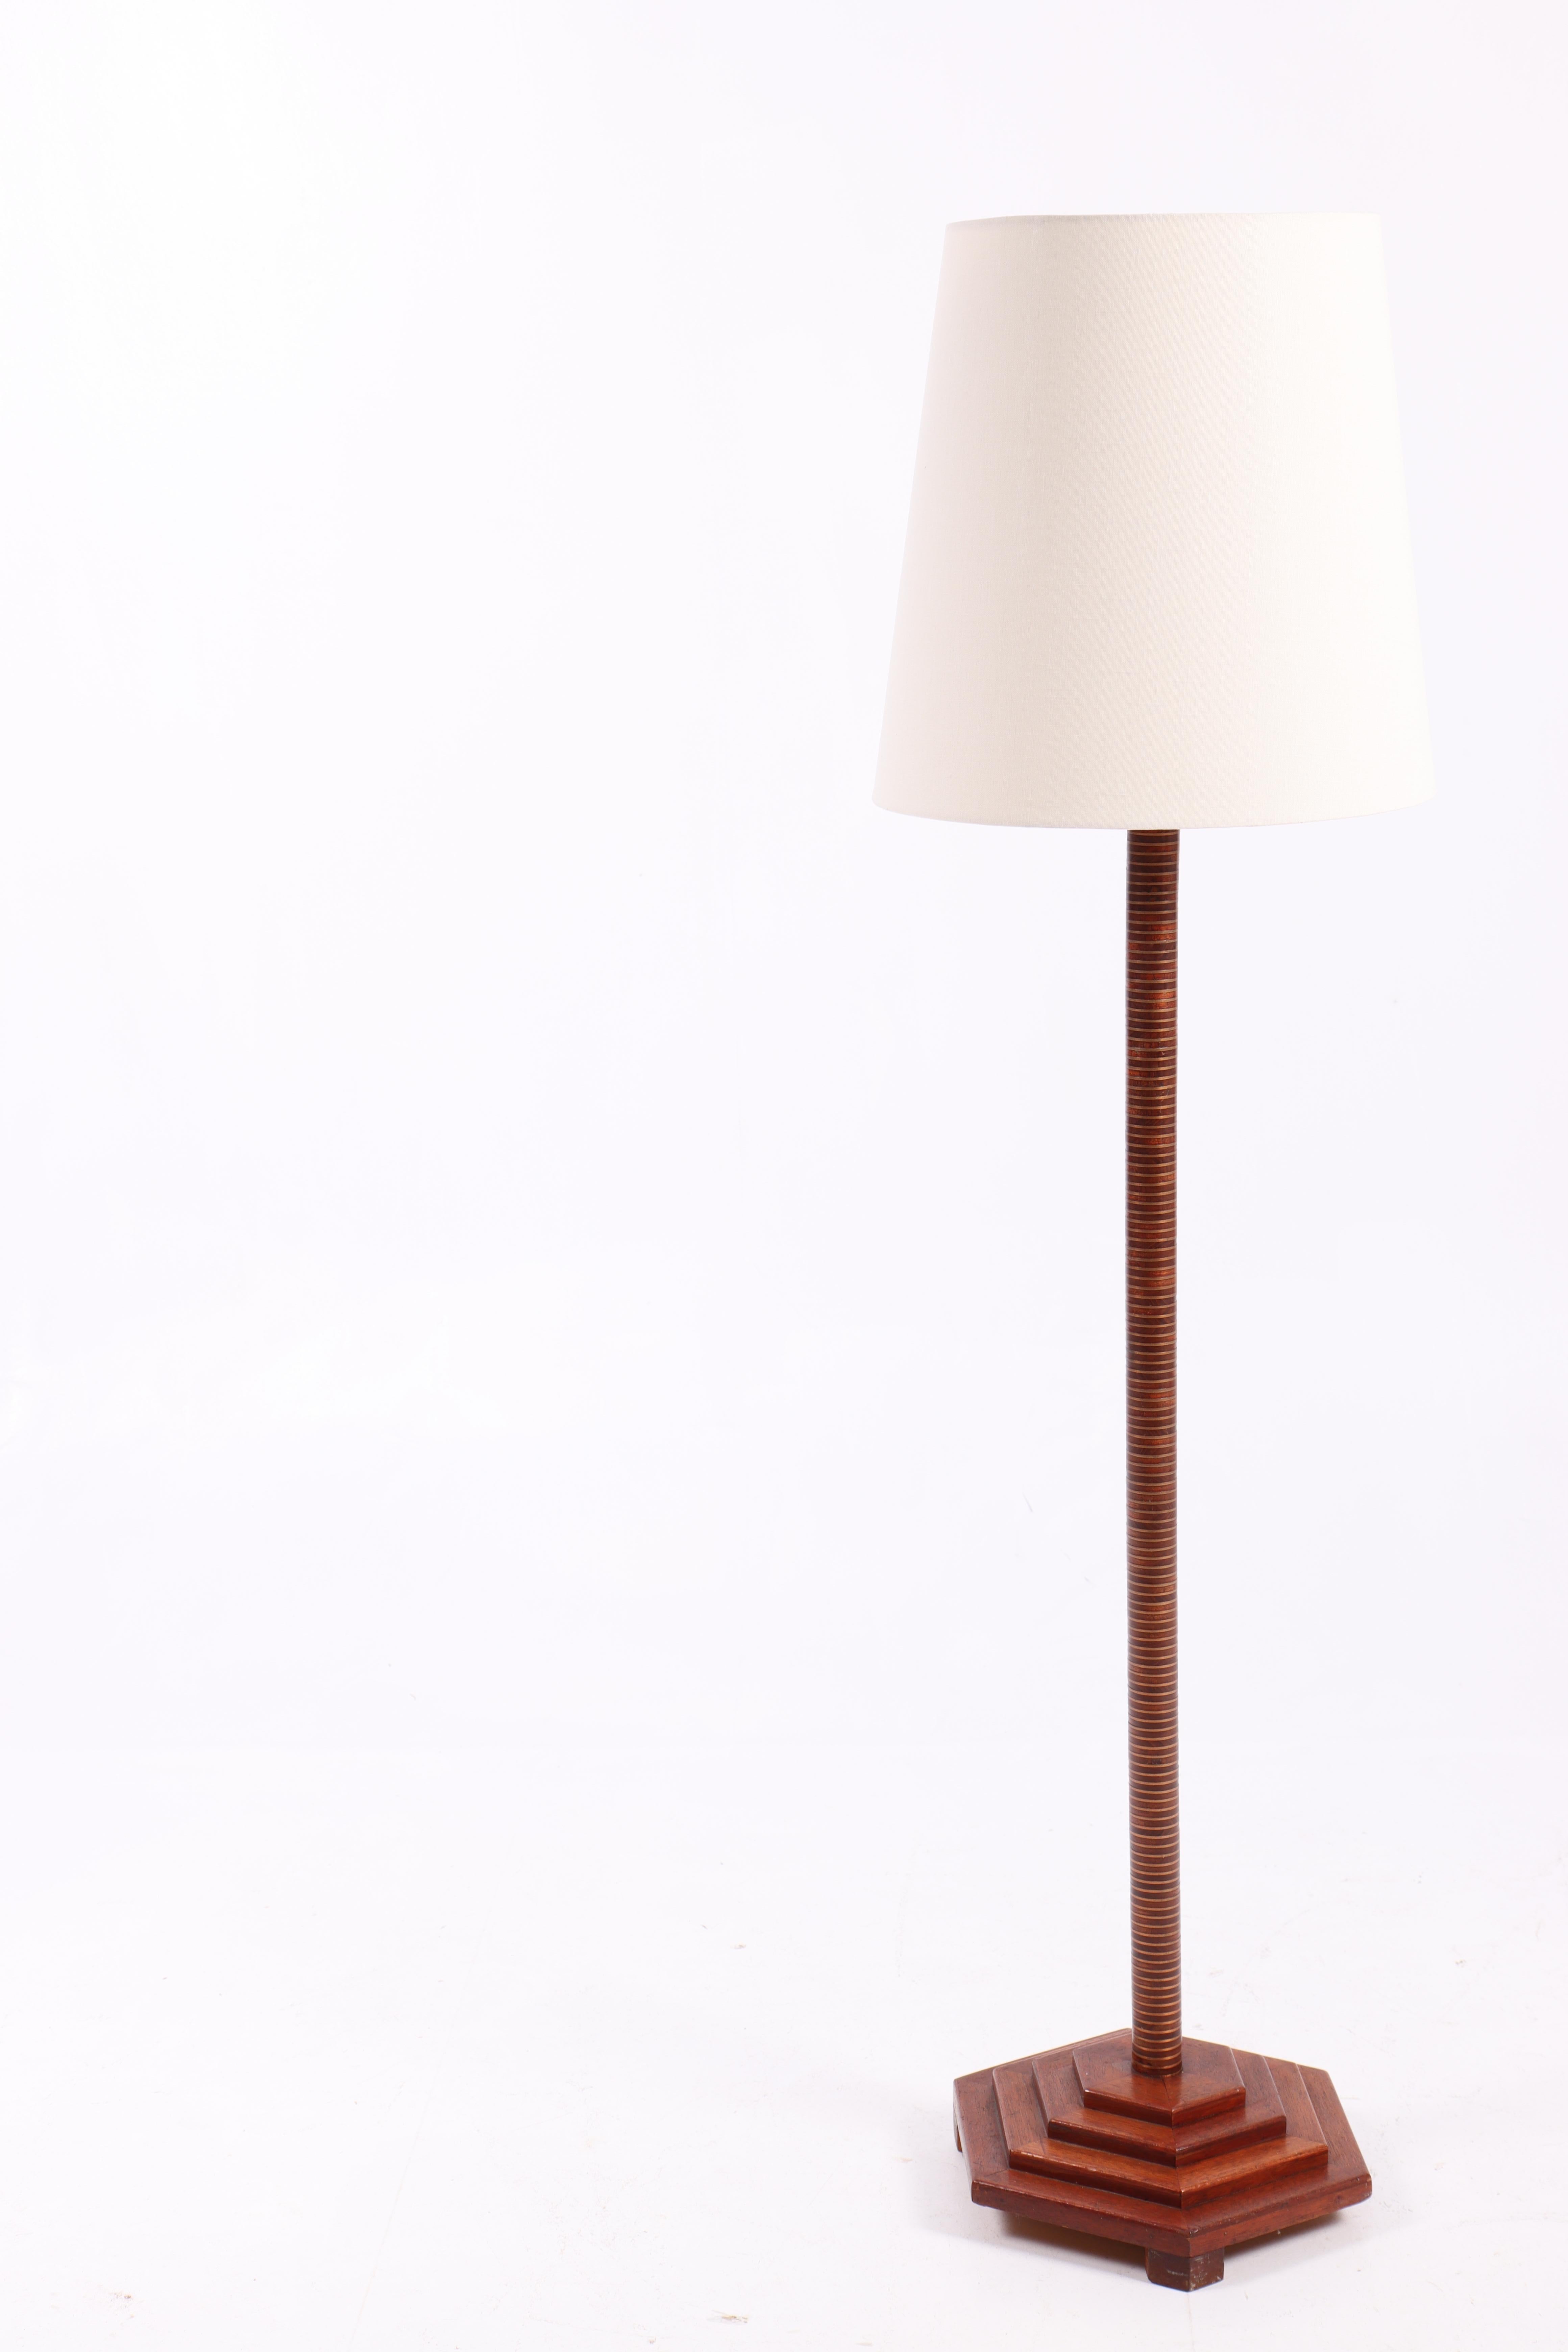 Danish Modern Midcentury Floor Lamp in Teak, Danish Design, 1950s For Sale 3